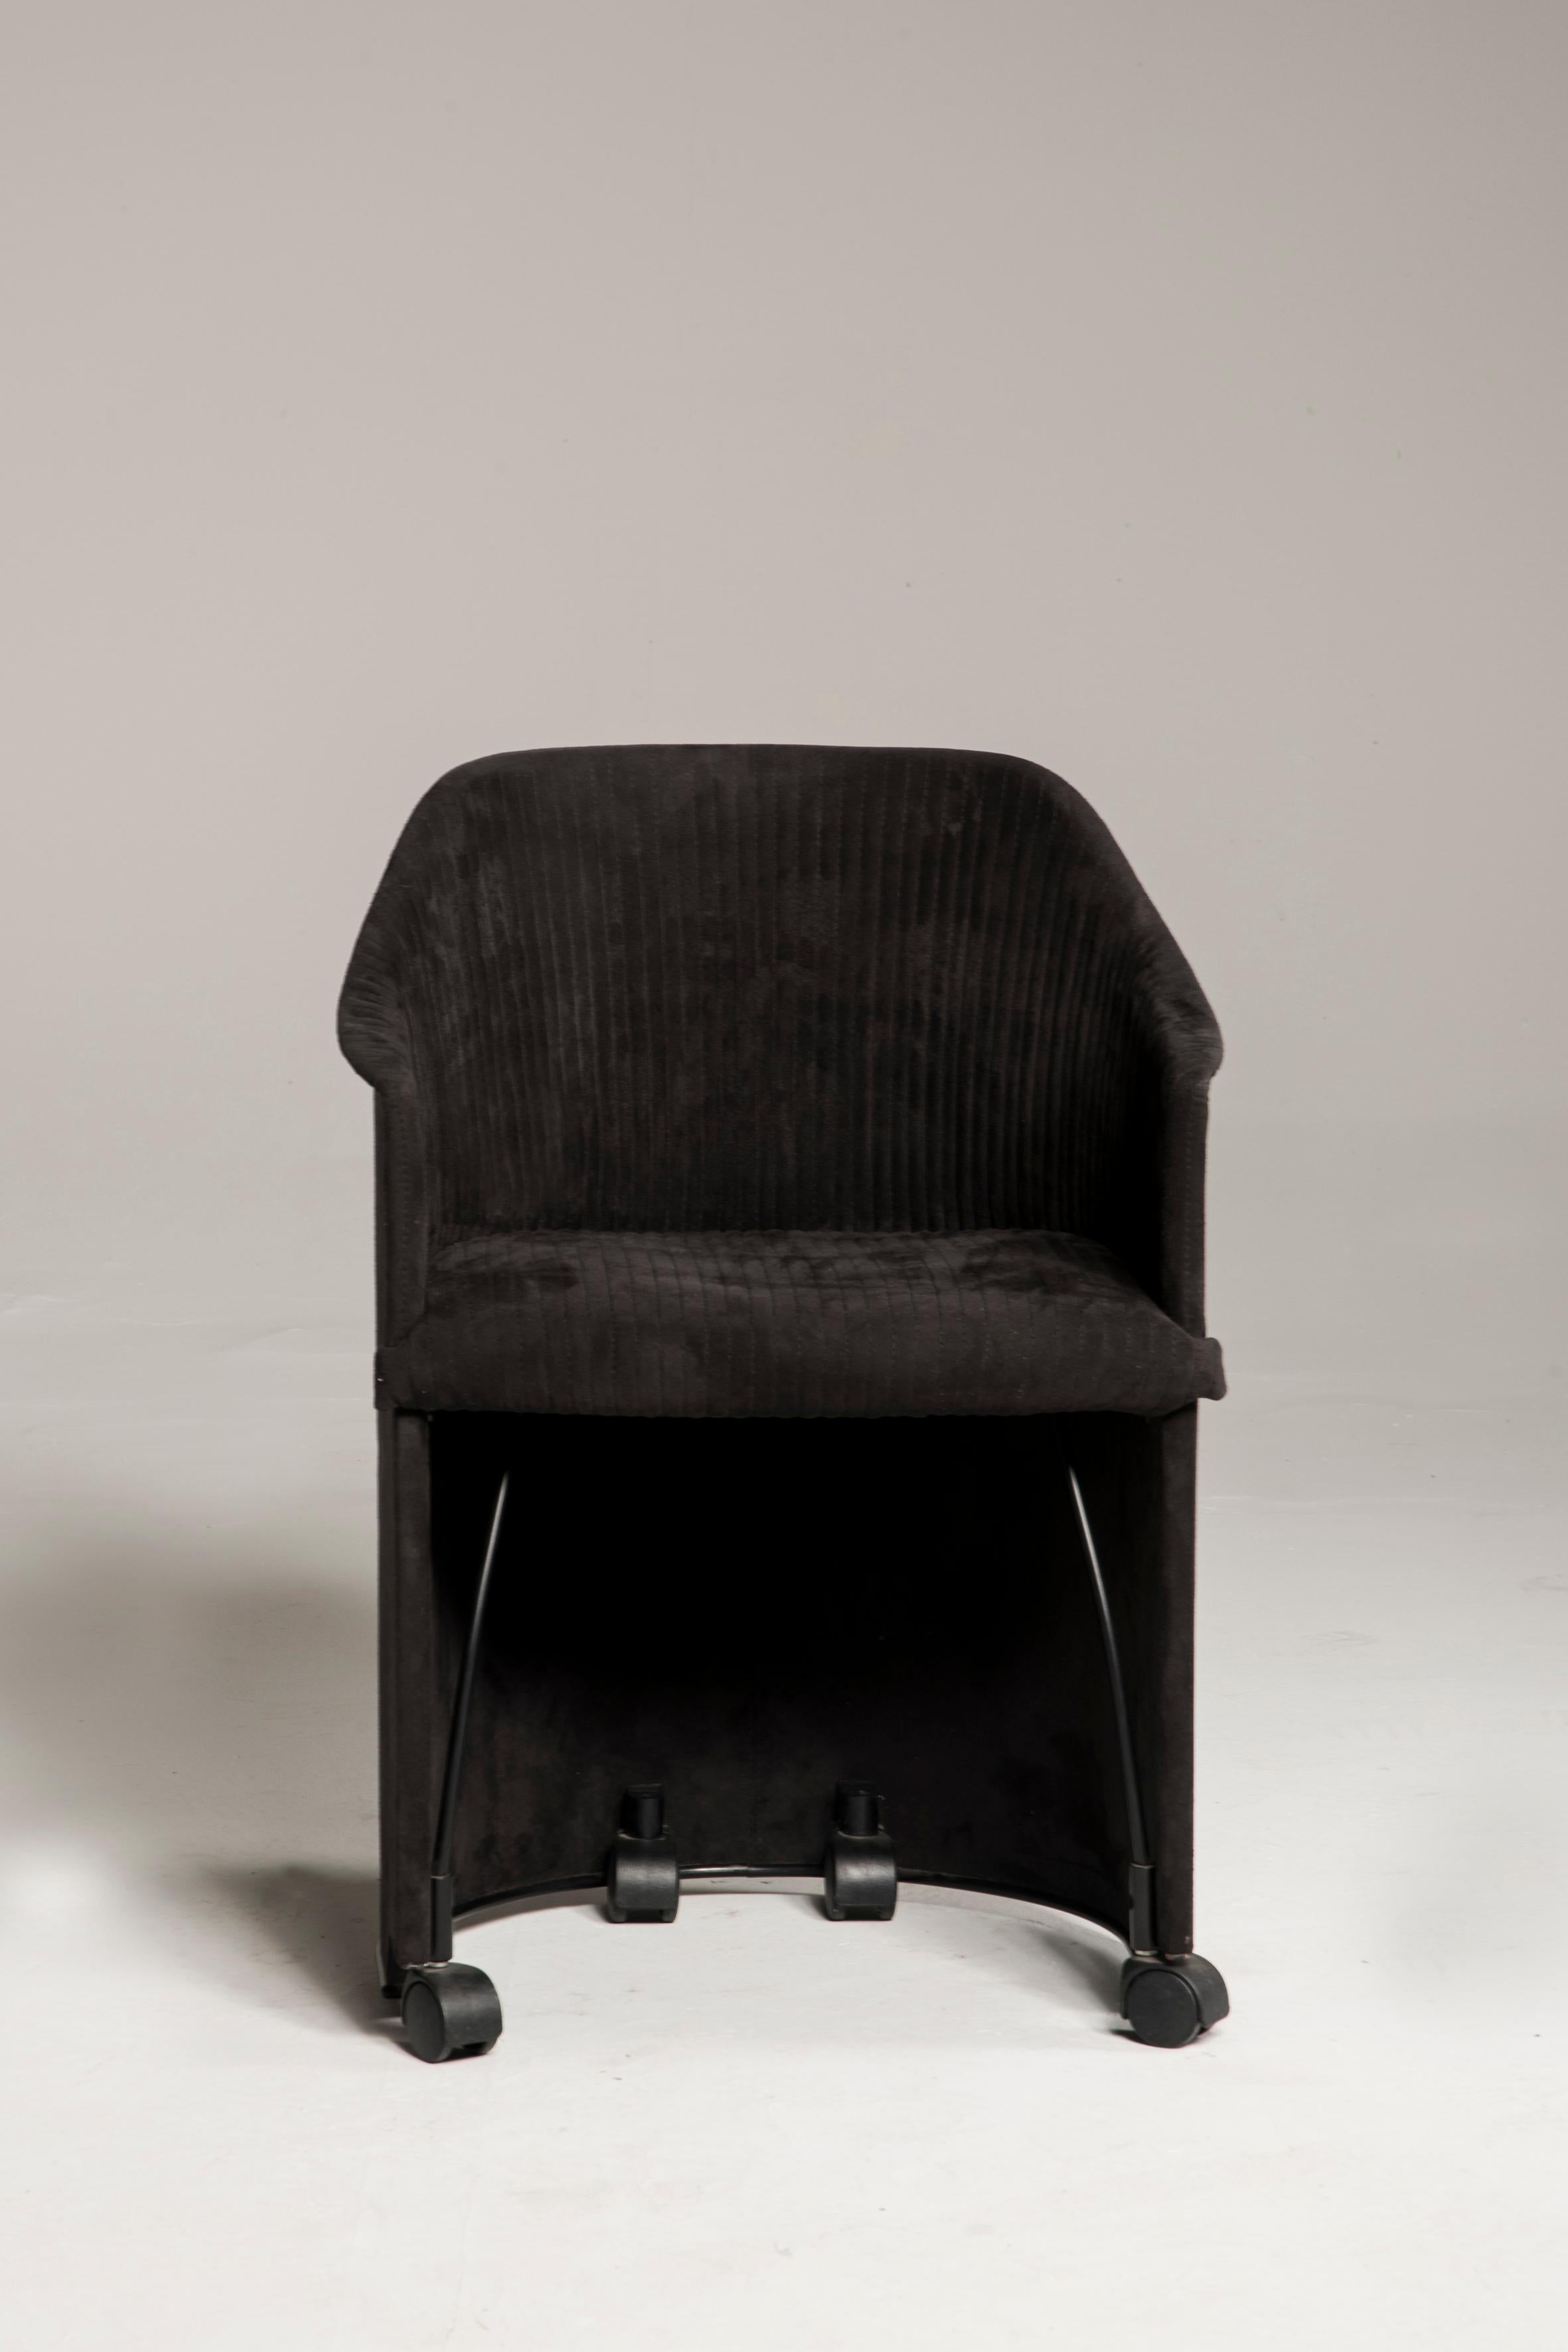 Acht Rädern-Sessel der B&B MaxAlto Kollektion Alcantara, 1990er Jahre (Moderne) im Angebot